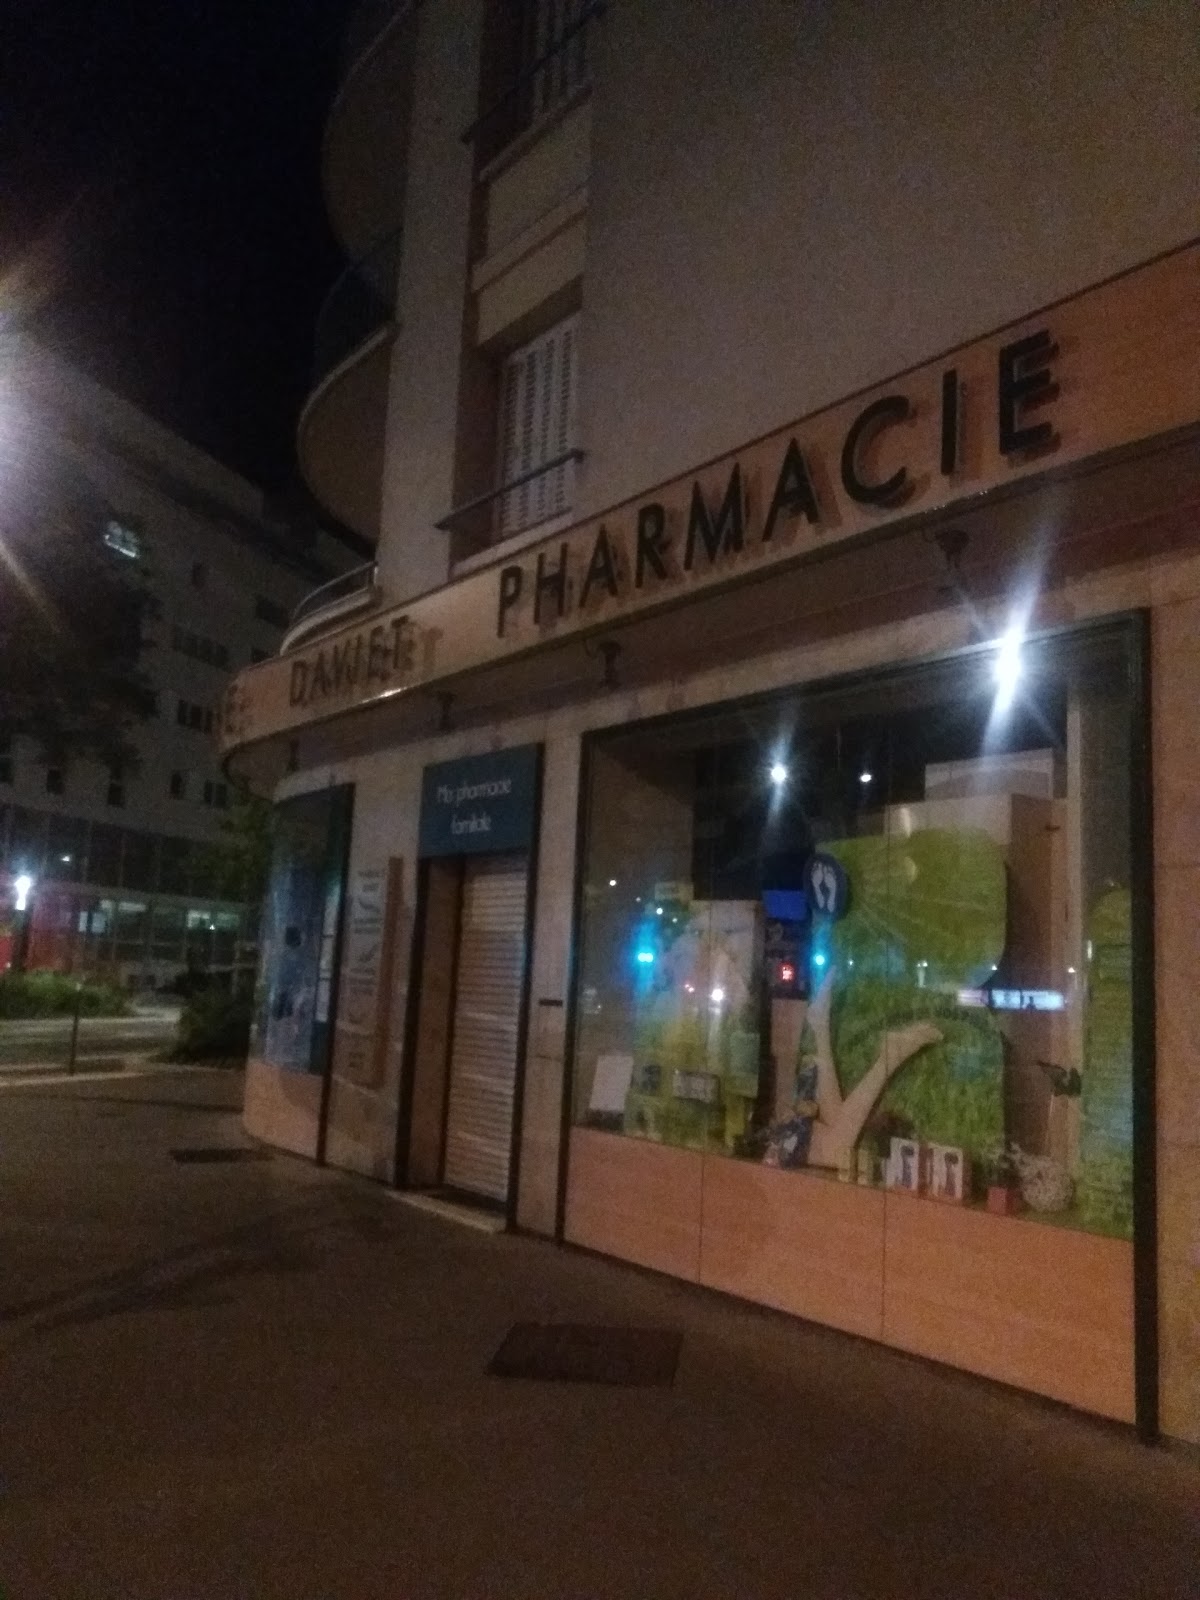 Pharmacie Daviet